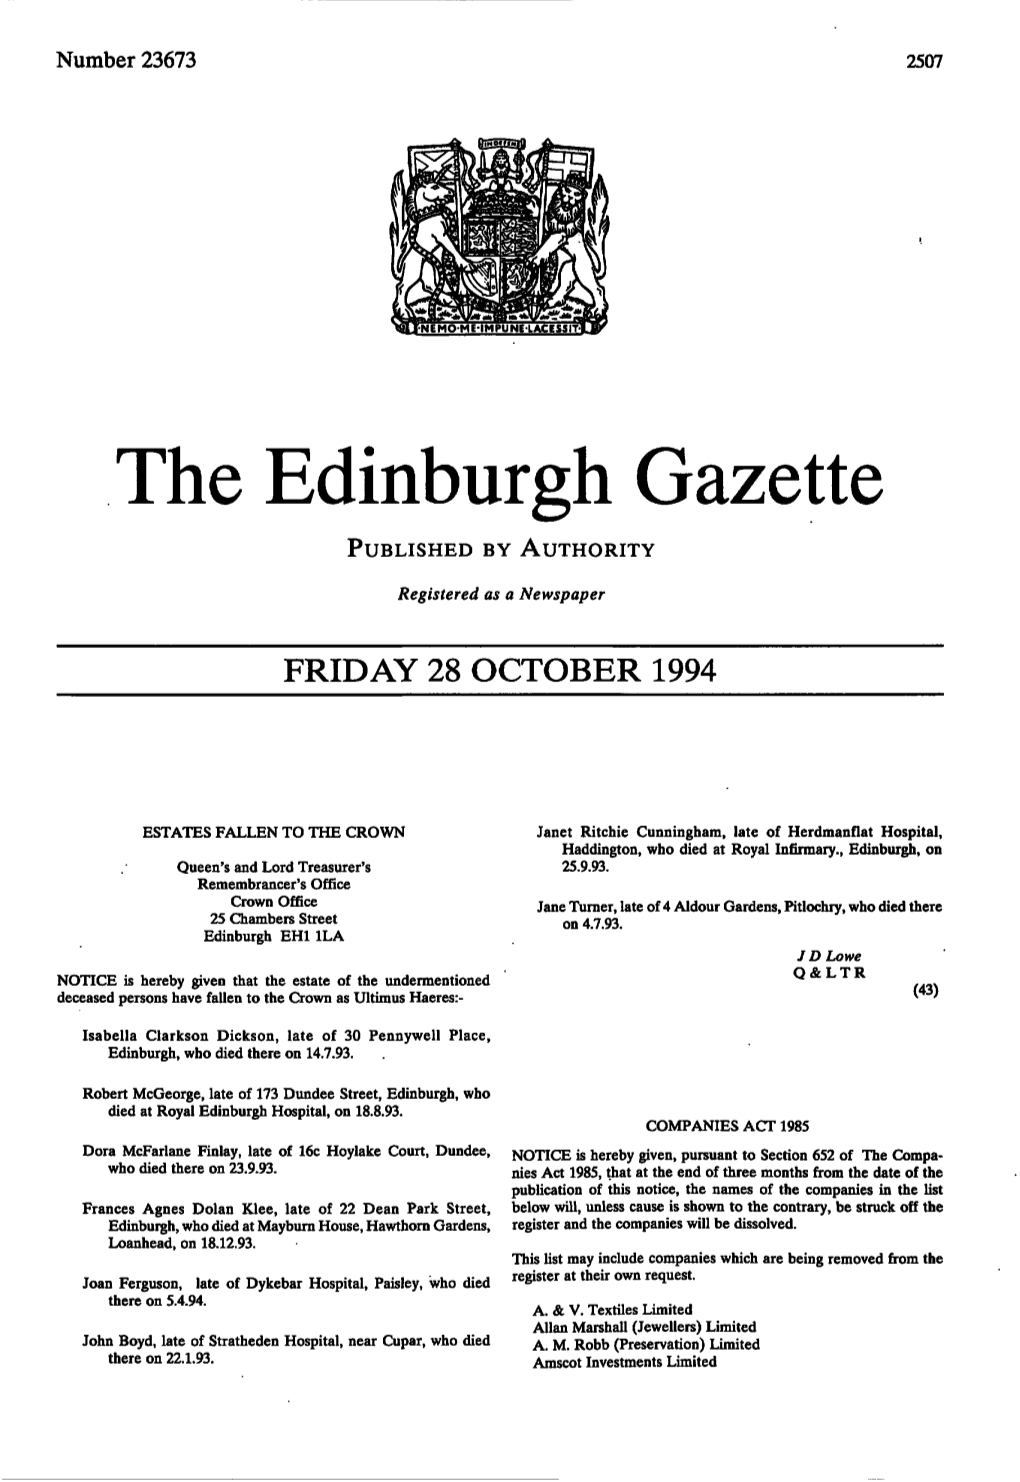 The Edinburgh Gazette PUBLISHED by AUTHORITY